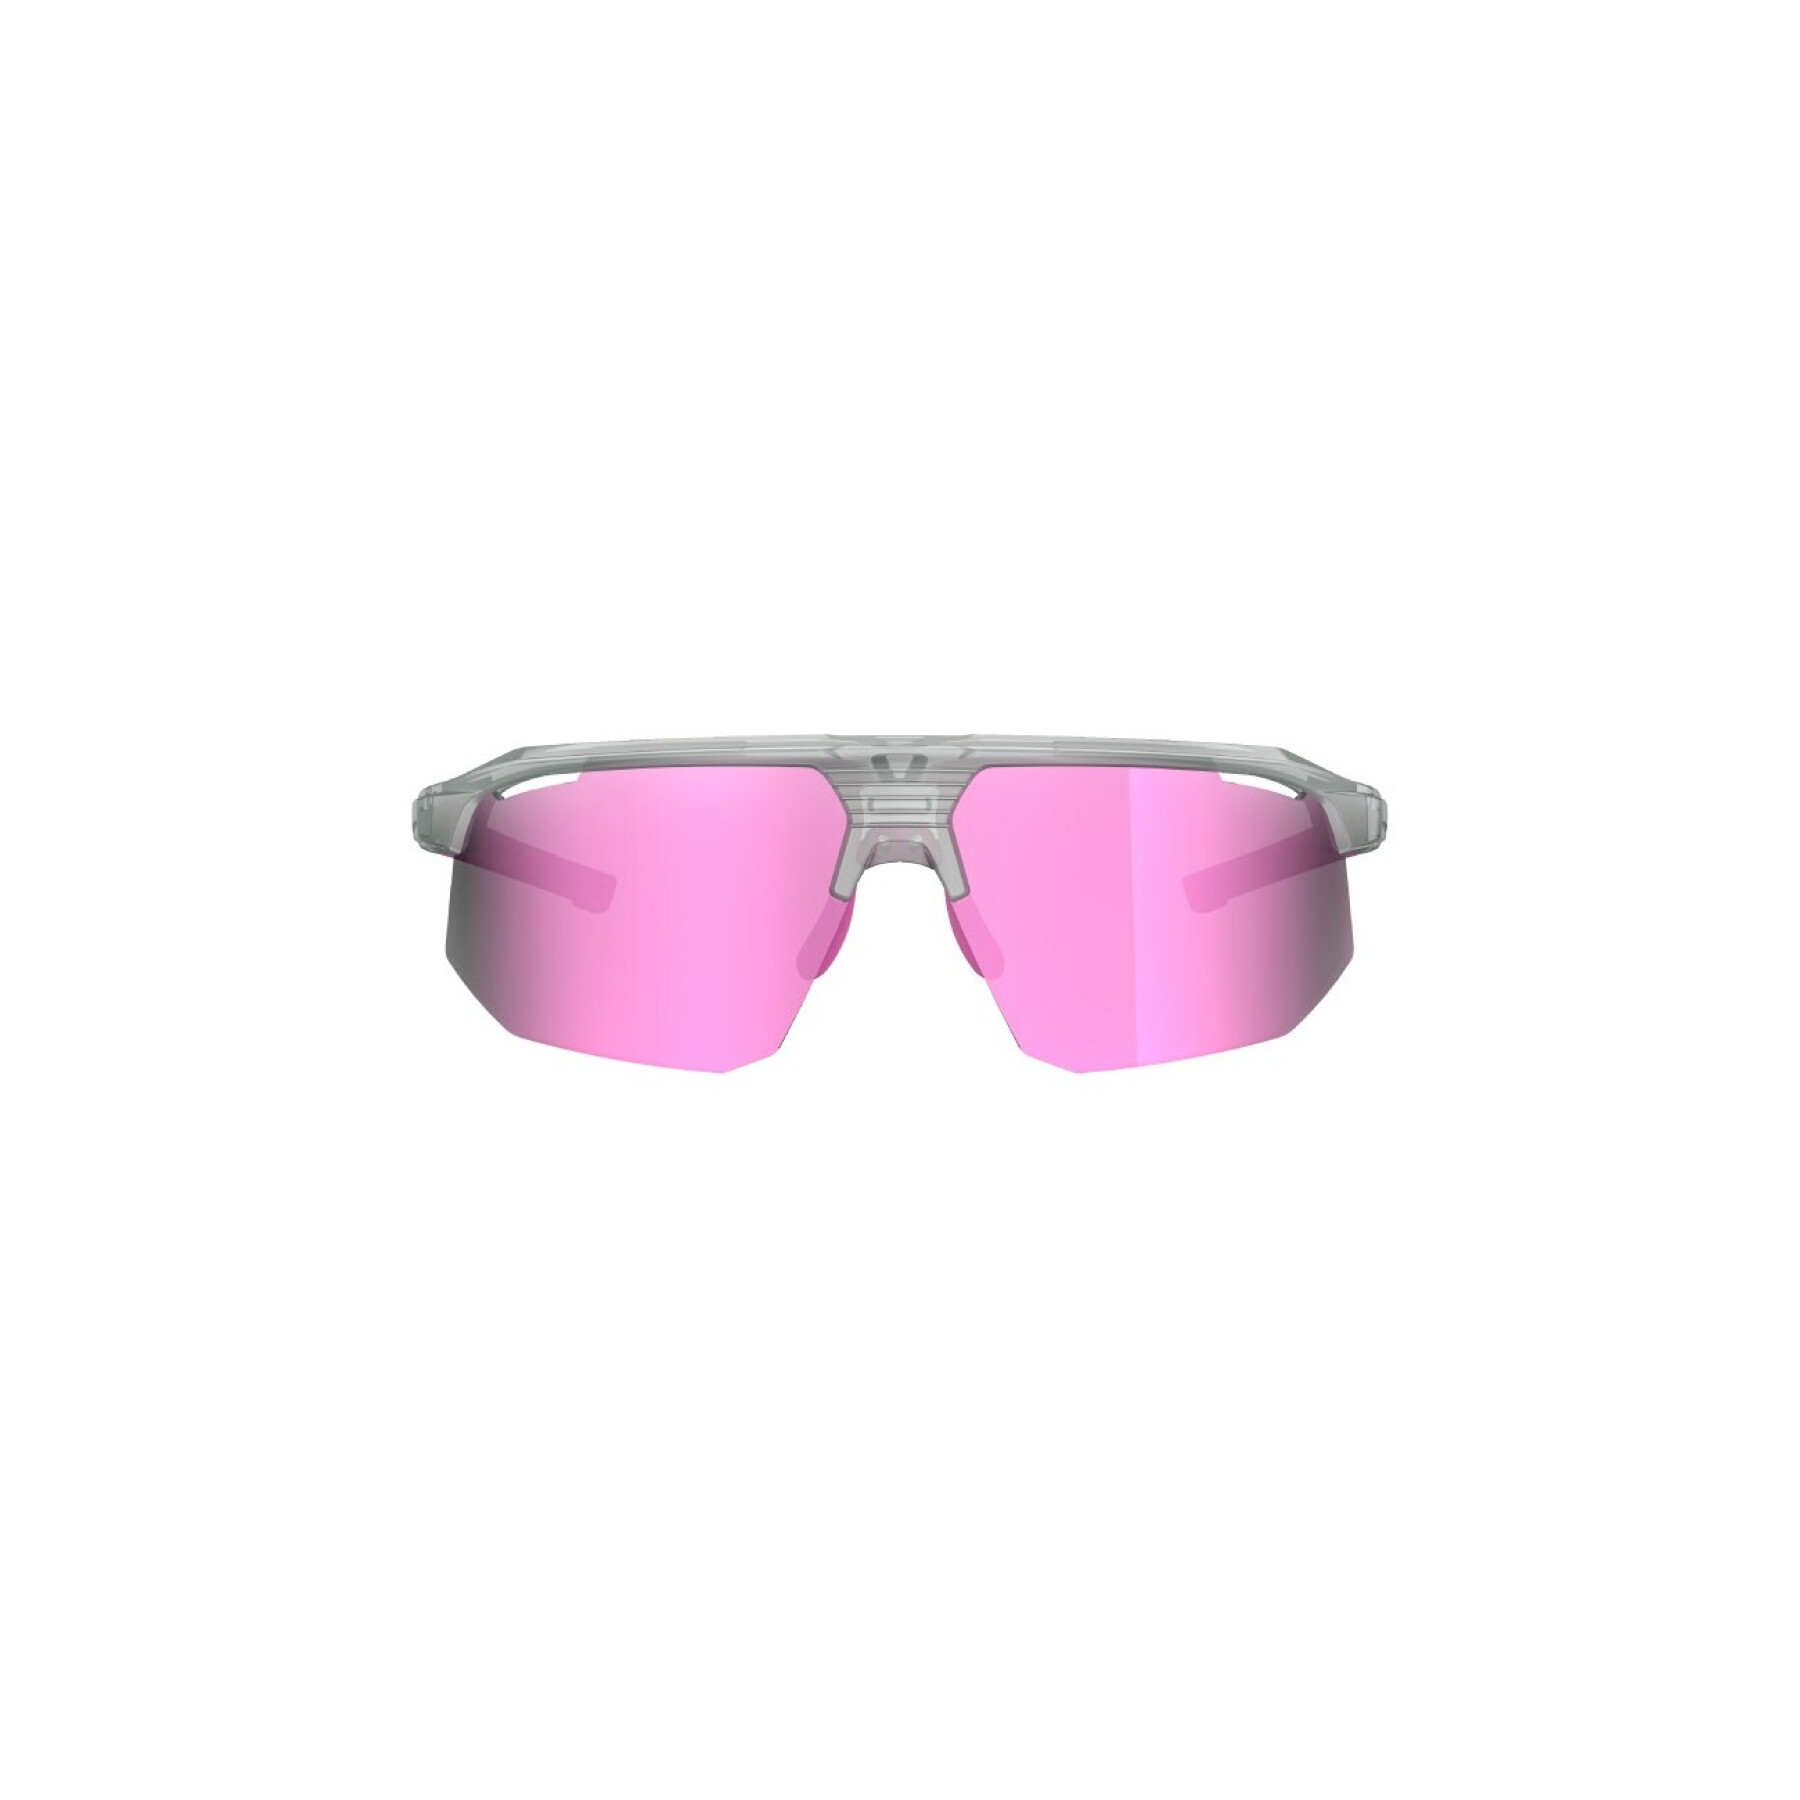 Sunglasses AZR Pro Arrow RX